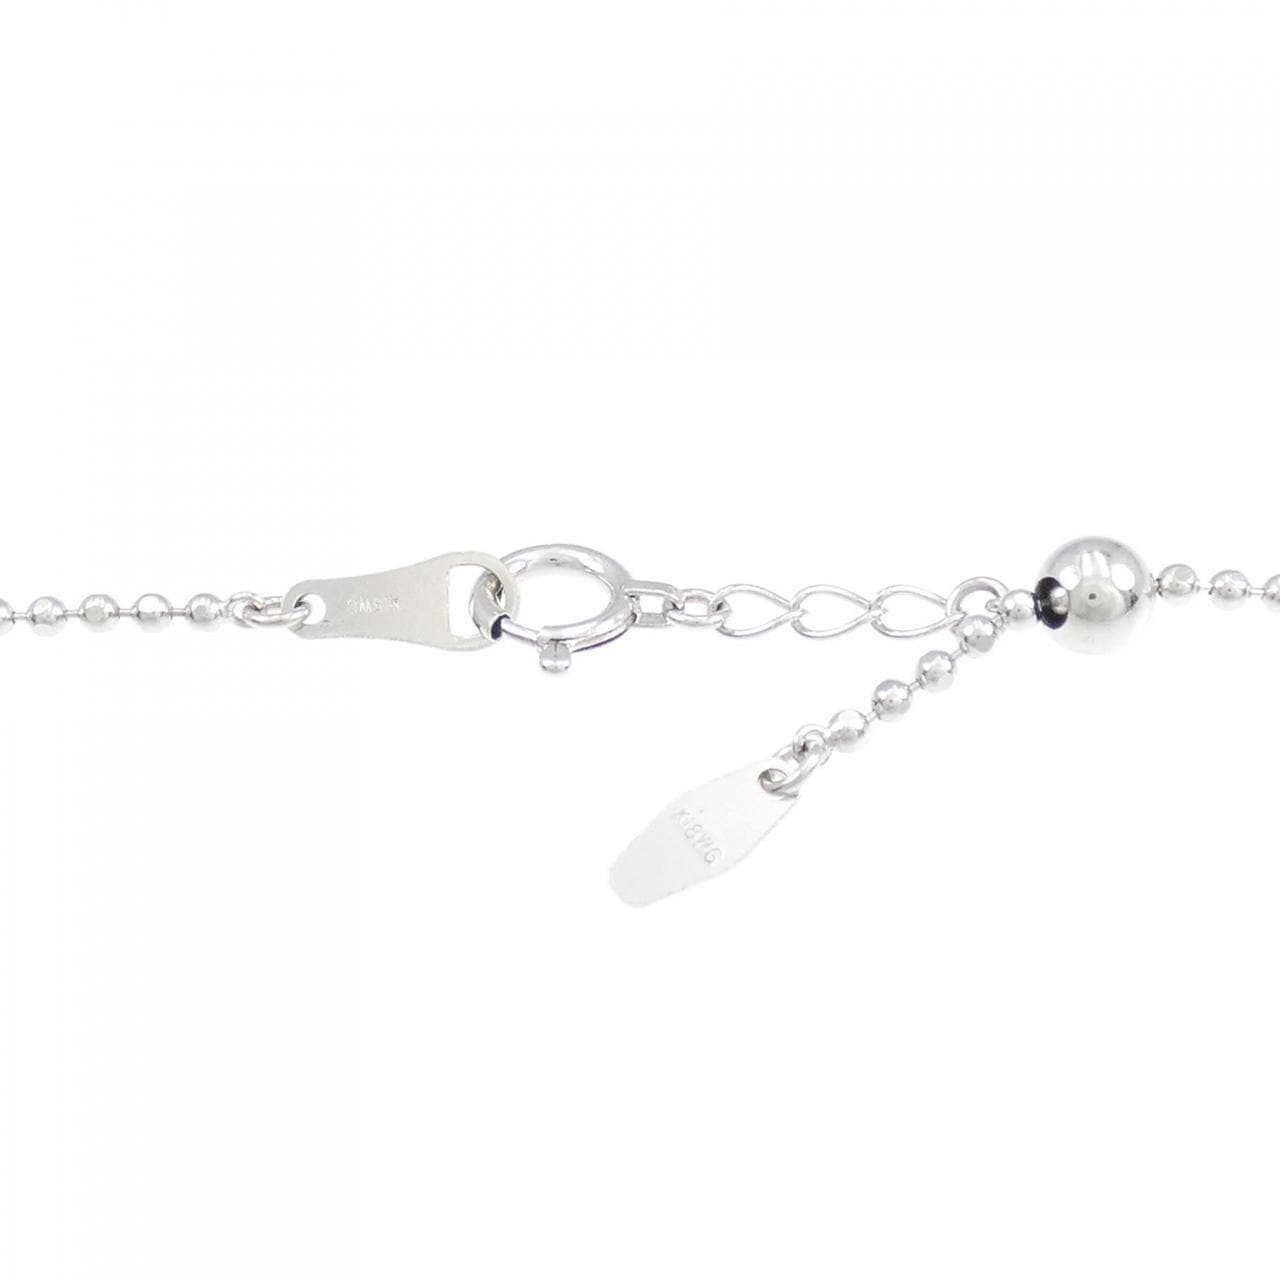 K18WG sapphire necklace 0.36CT